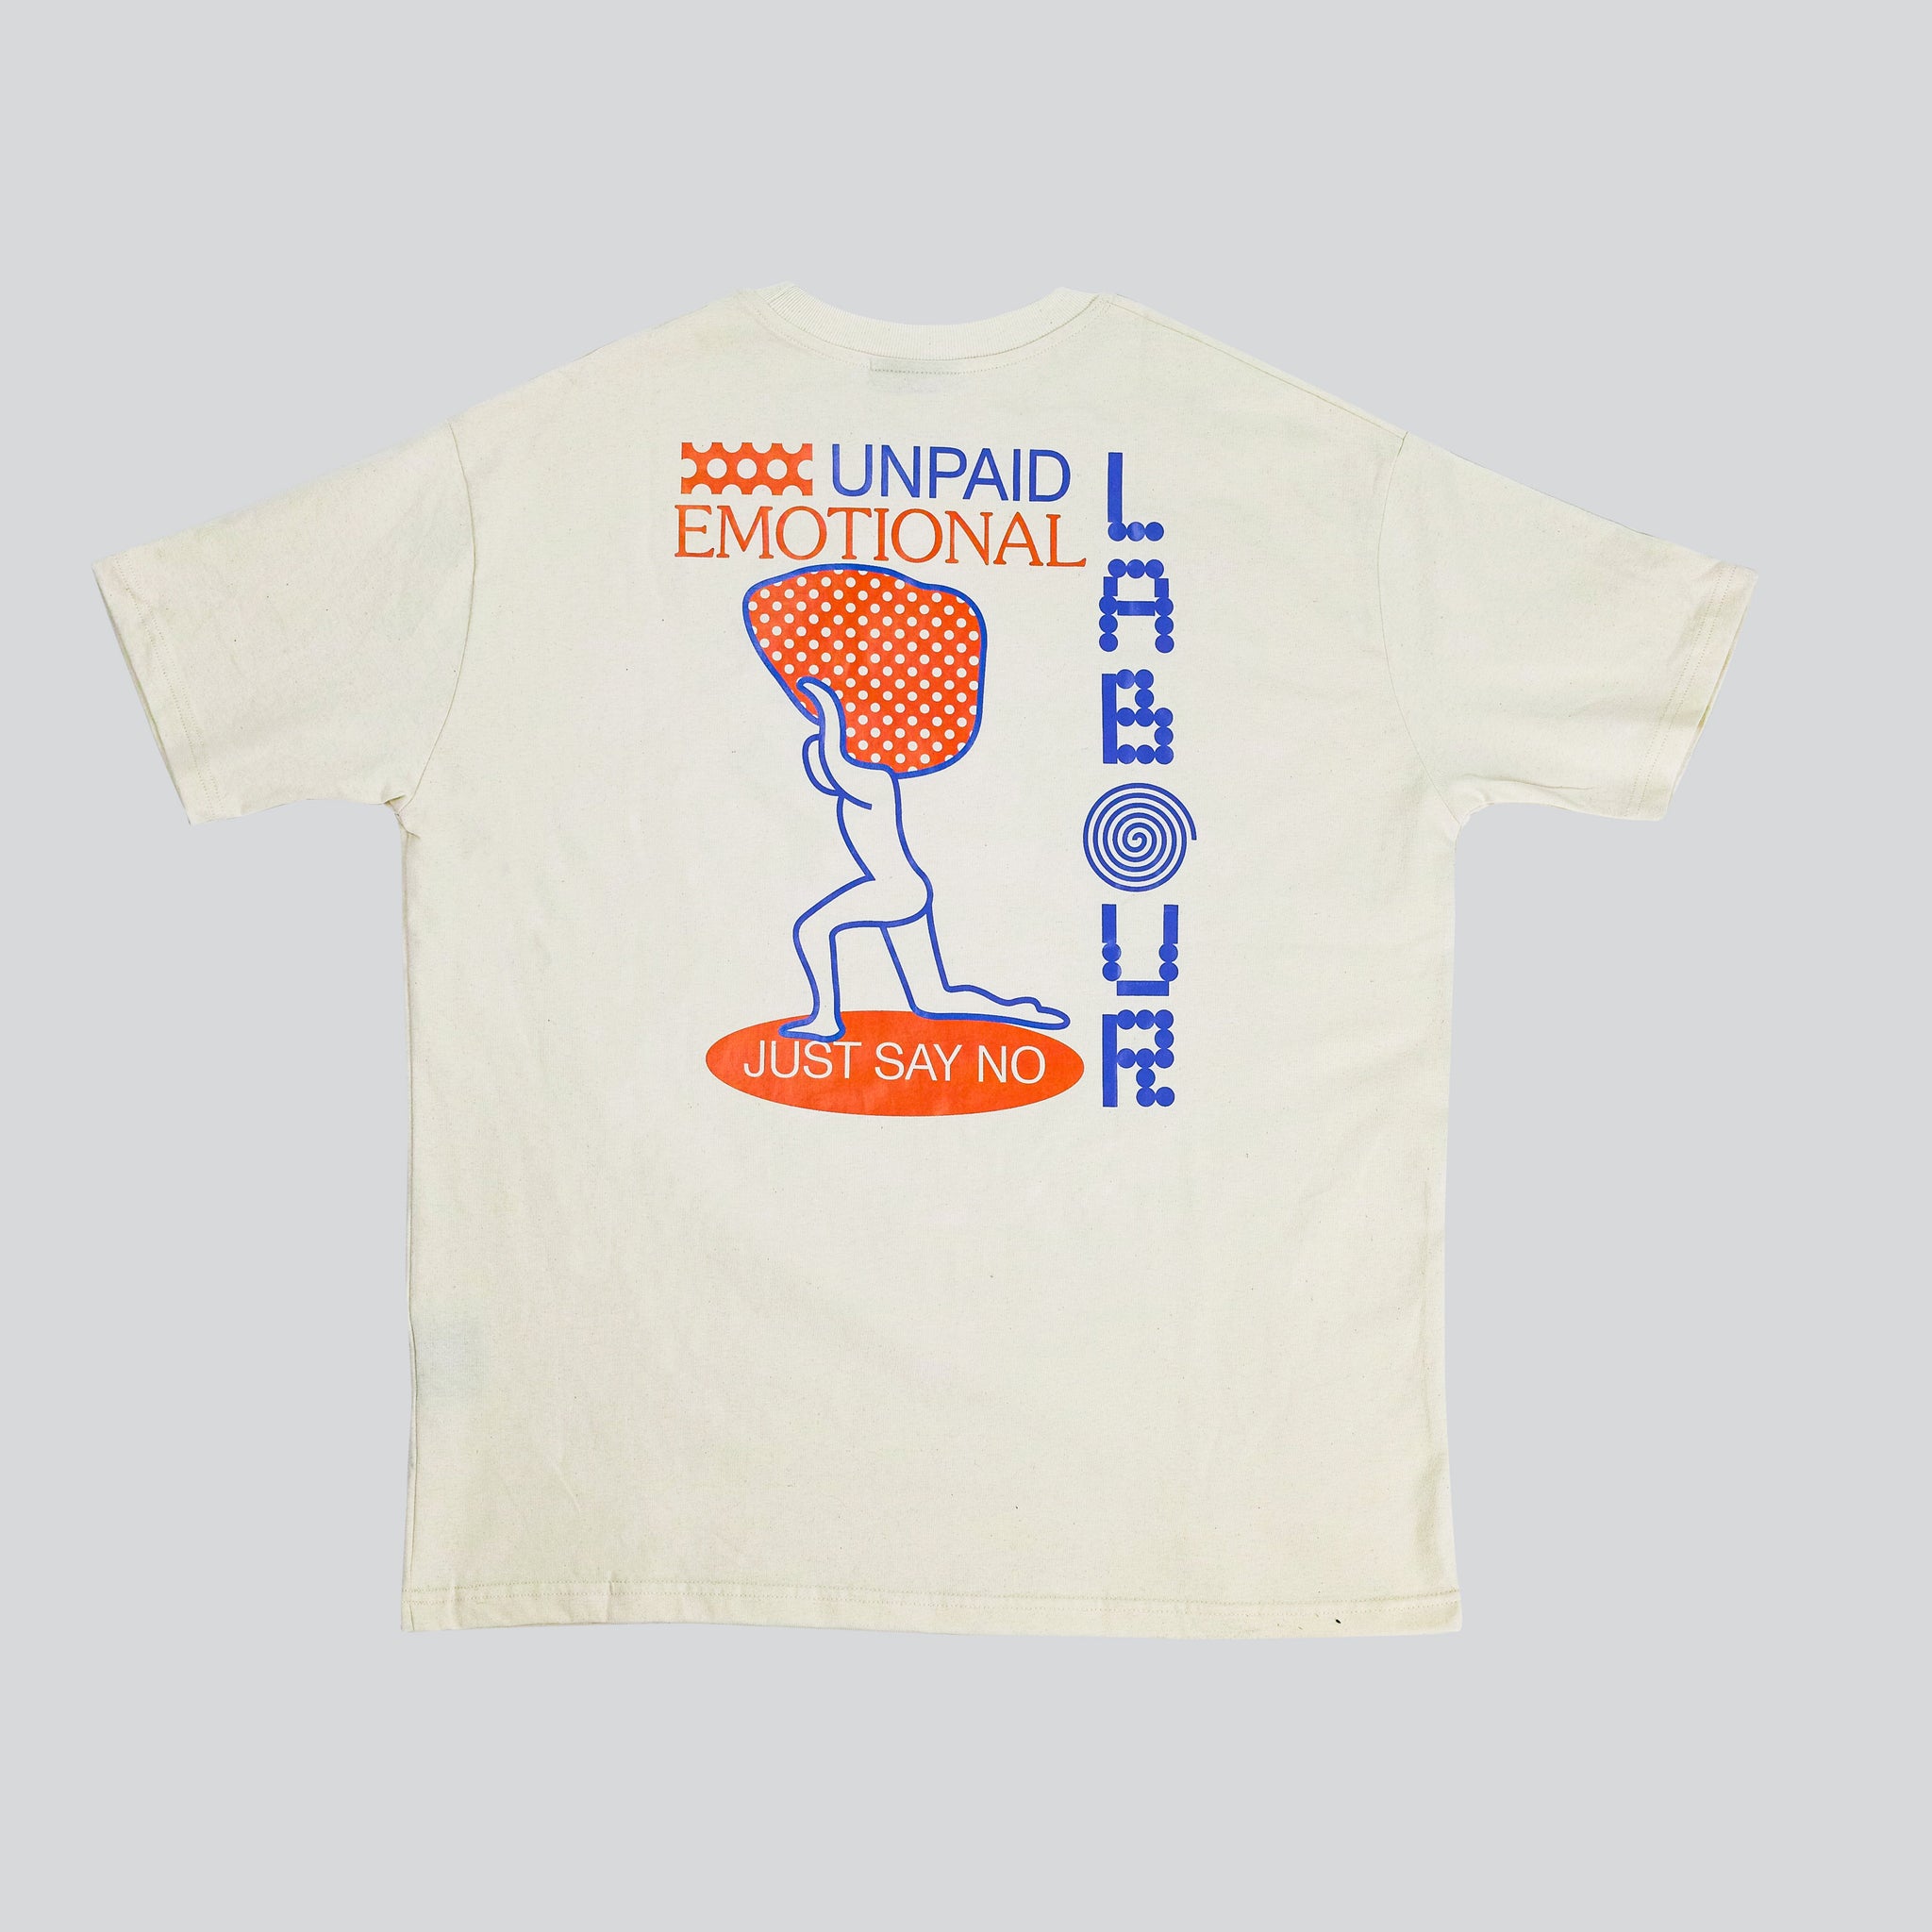 Emotional Labour t-shirt